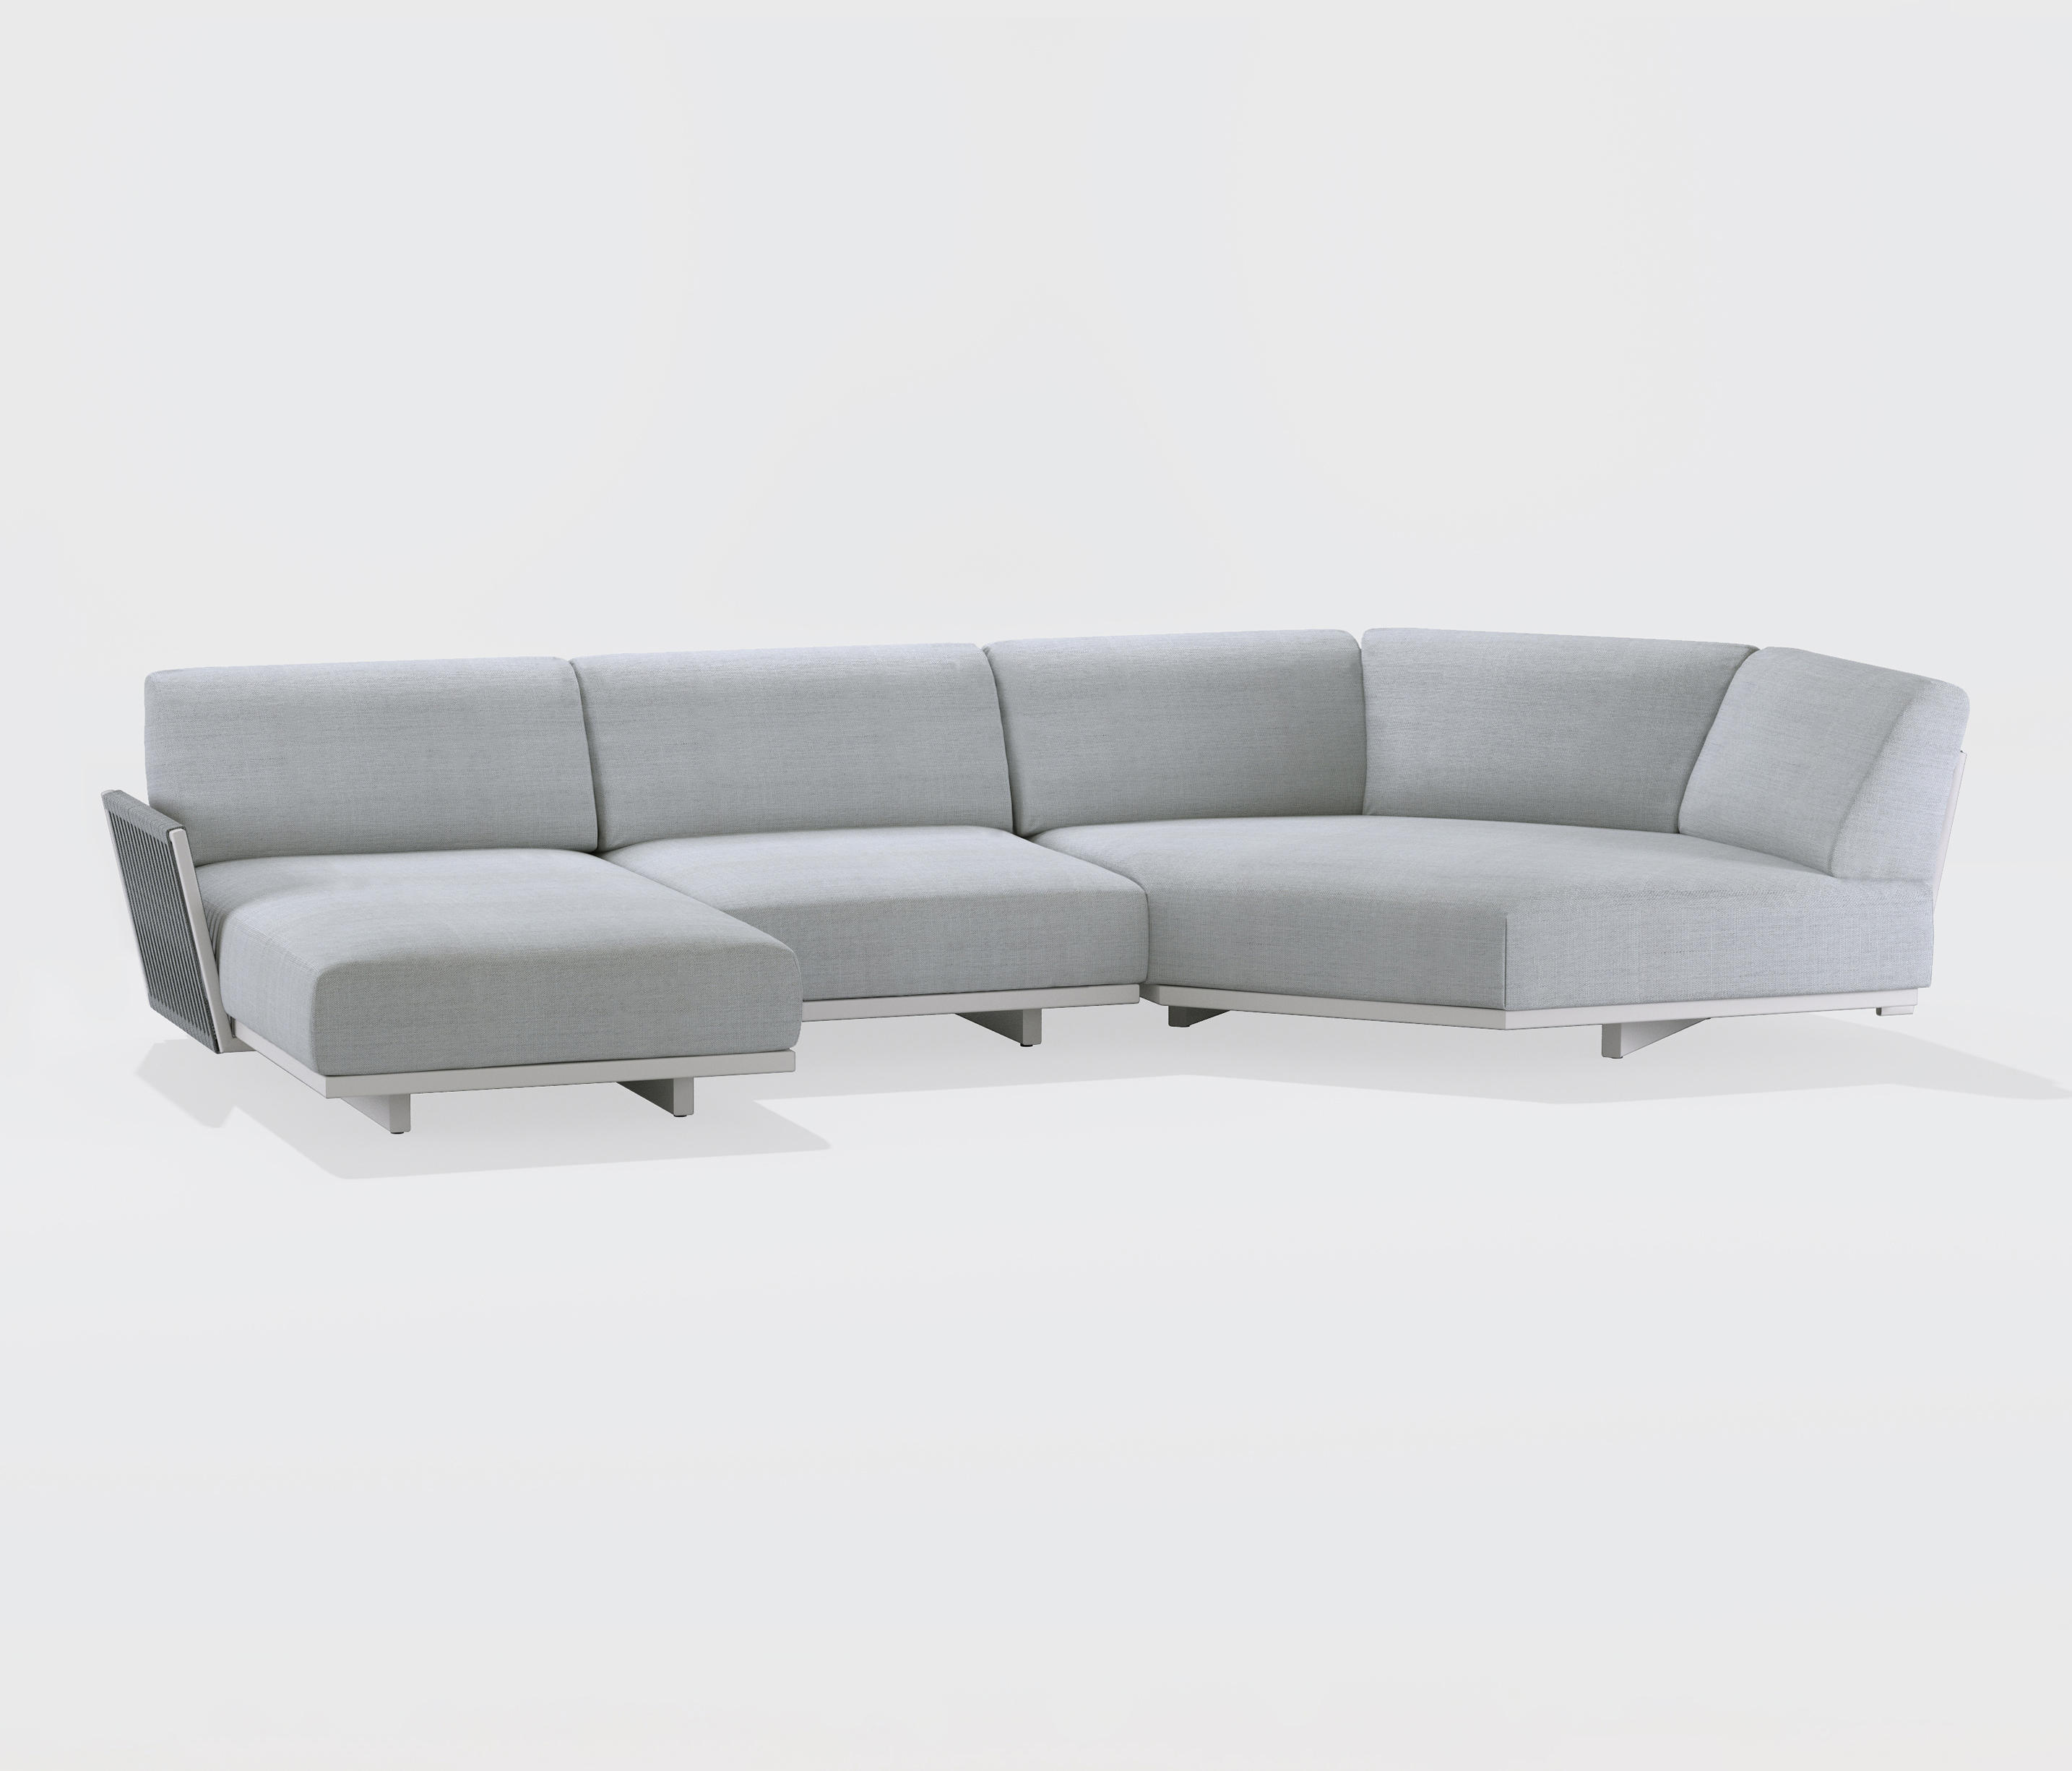 ægtefælle harmonisk Giftig Solaris modular sofa & designer furniture | Architonic